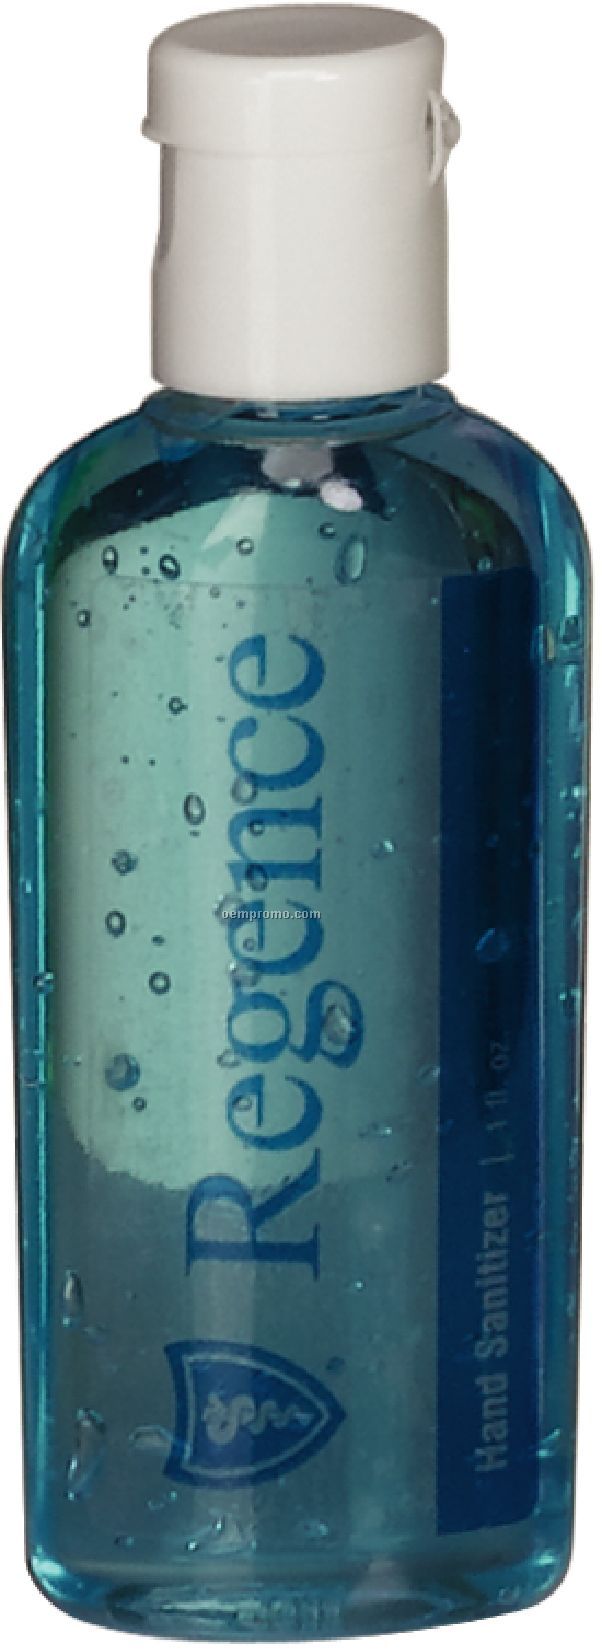 1 Oz. Tinted Sanitizer In Oval Bottle